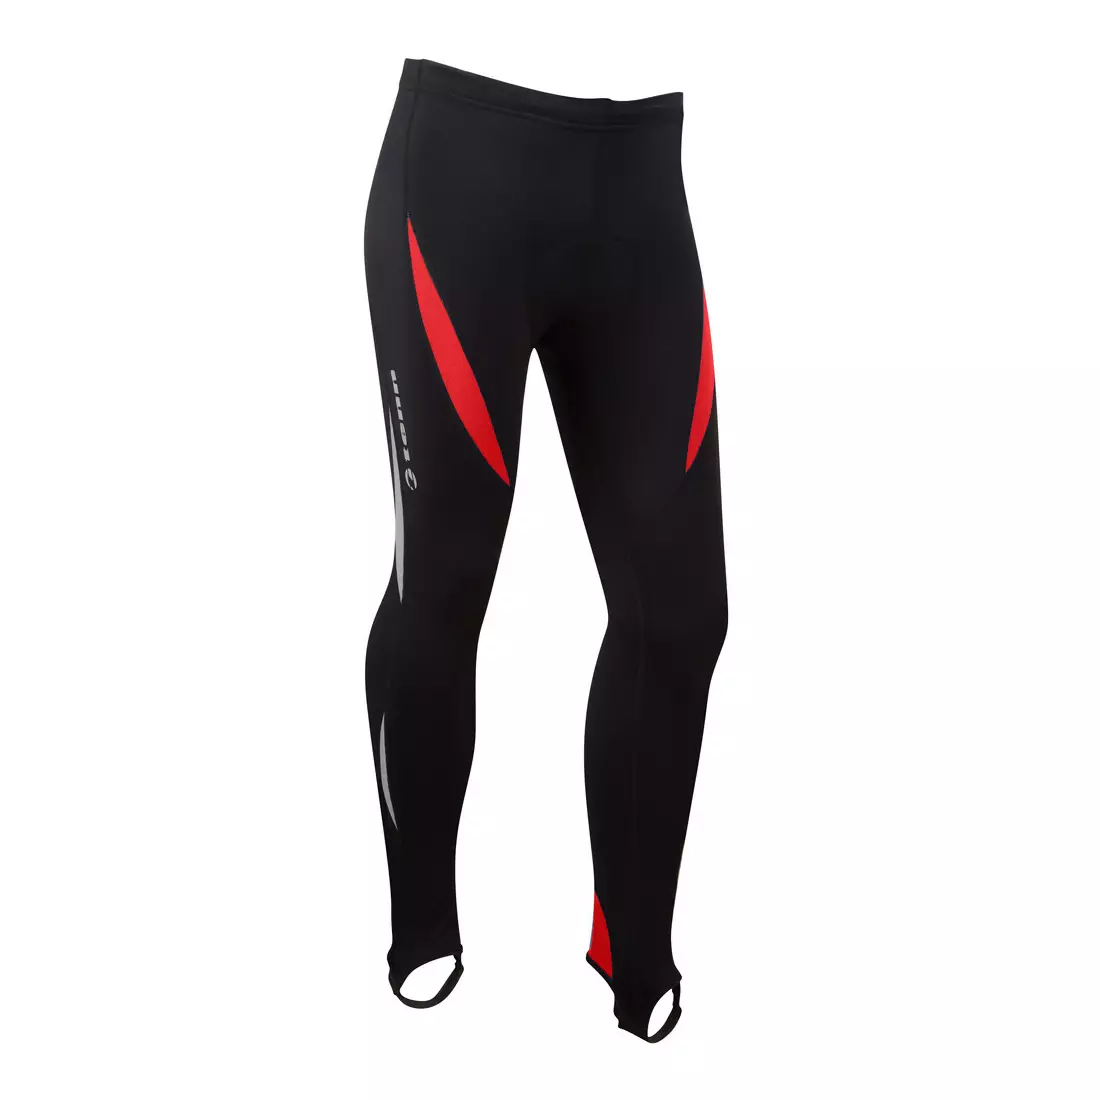 Zateplené cyklistické kalhoty TENN OUTDOORS LAZER, černo-červené